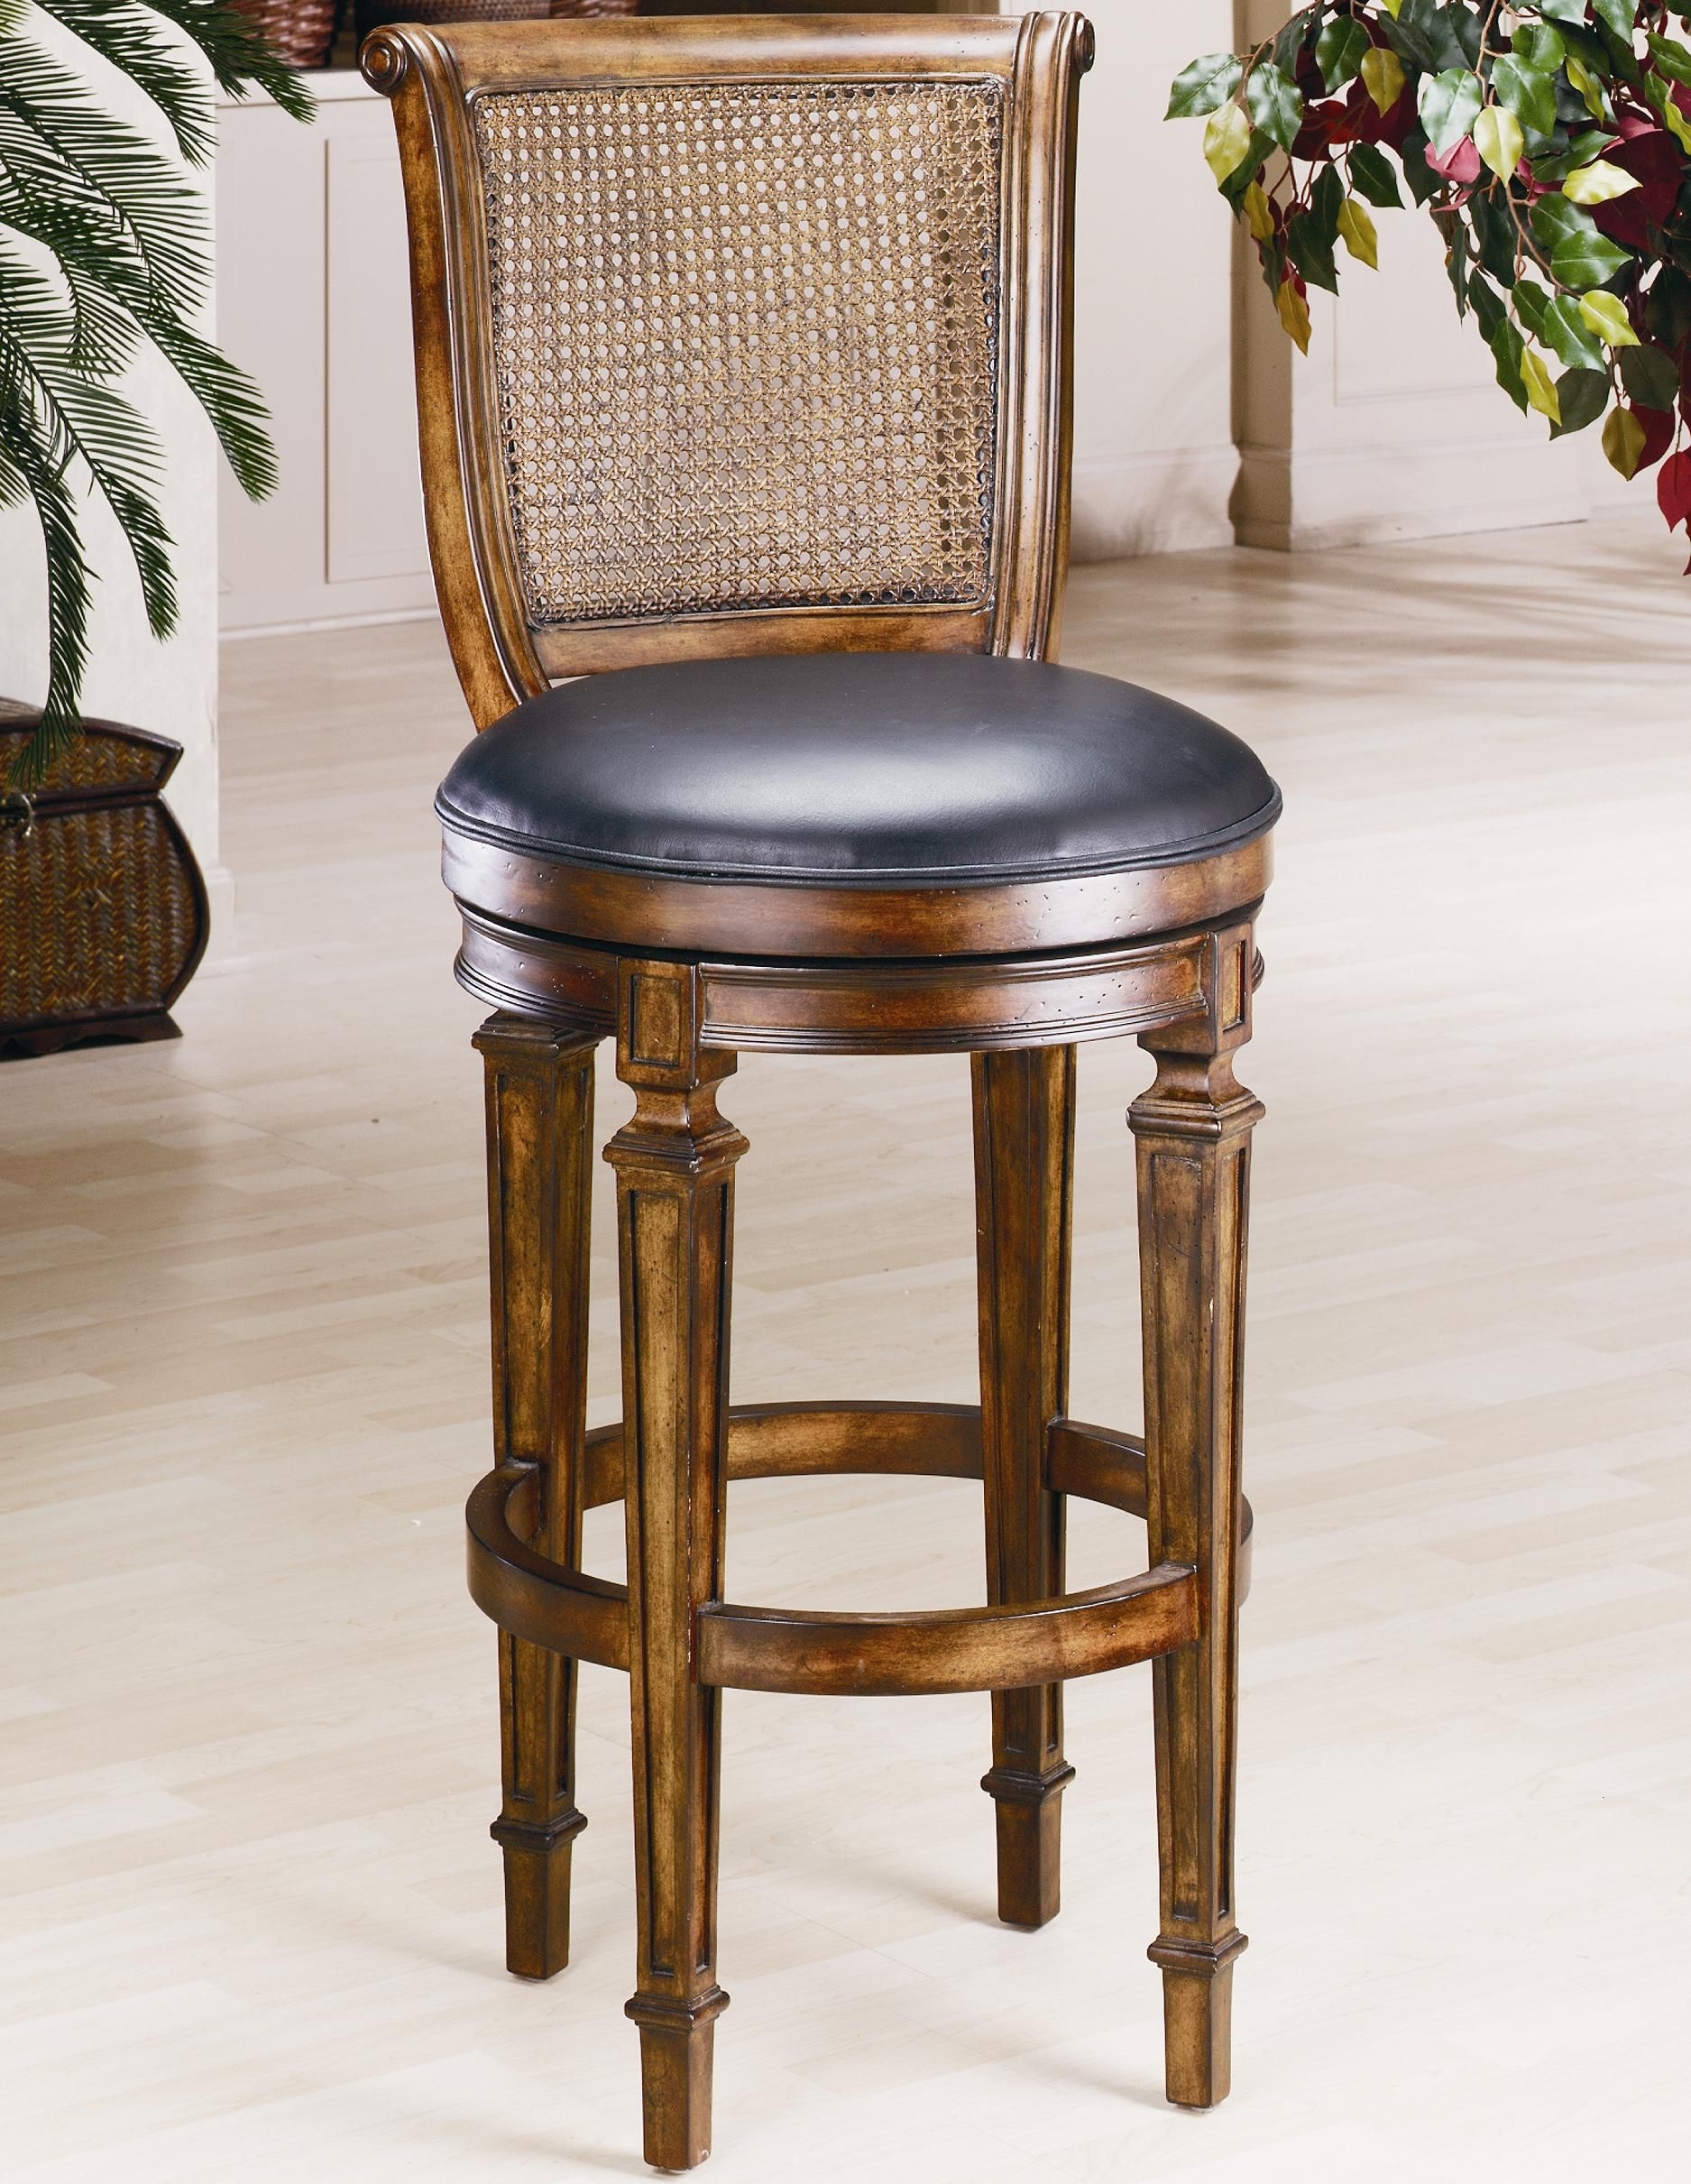 Hillsdale furniture dalton cane back counter stool w swivel